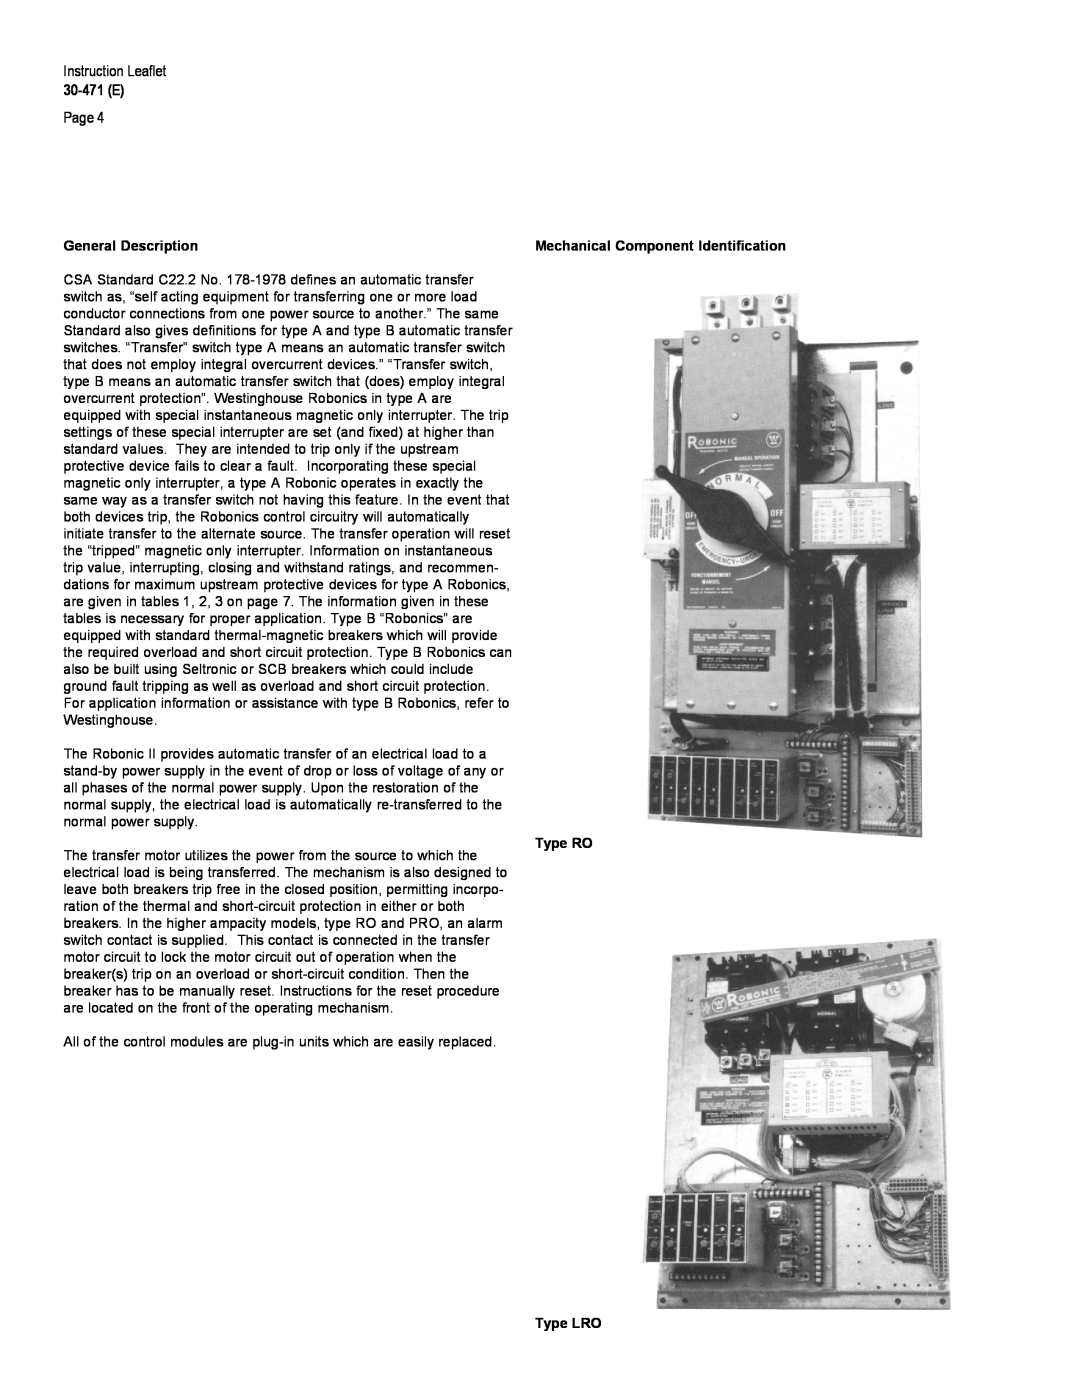 Westinghouse 30-471 (E) warranty 30-471 E, General Description, Type RO, Type LRO, Mechanical Component Identification 